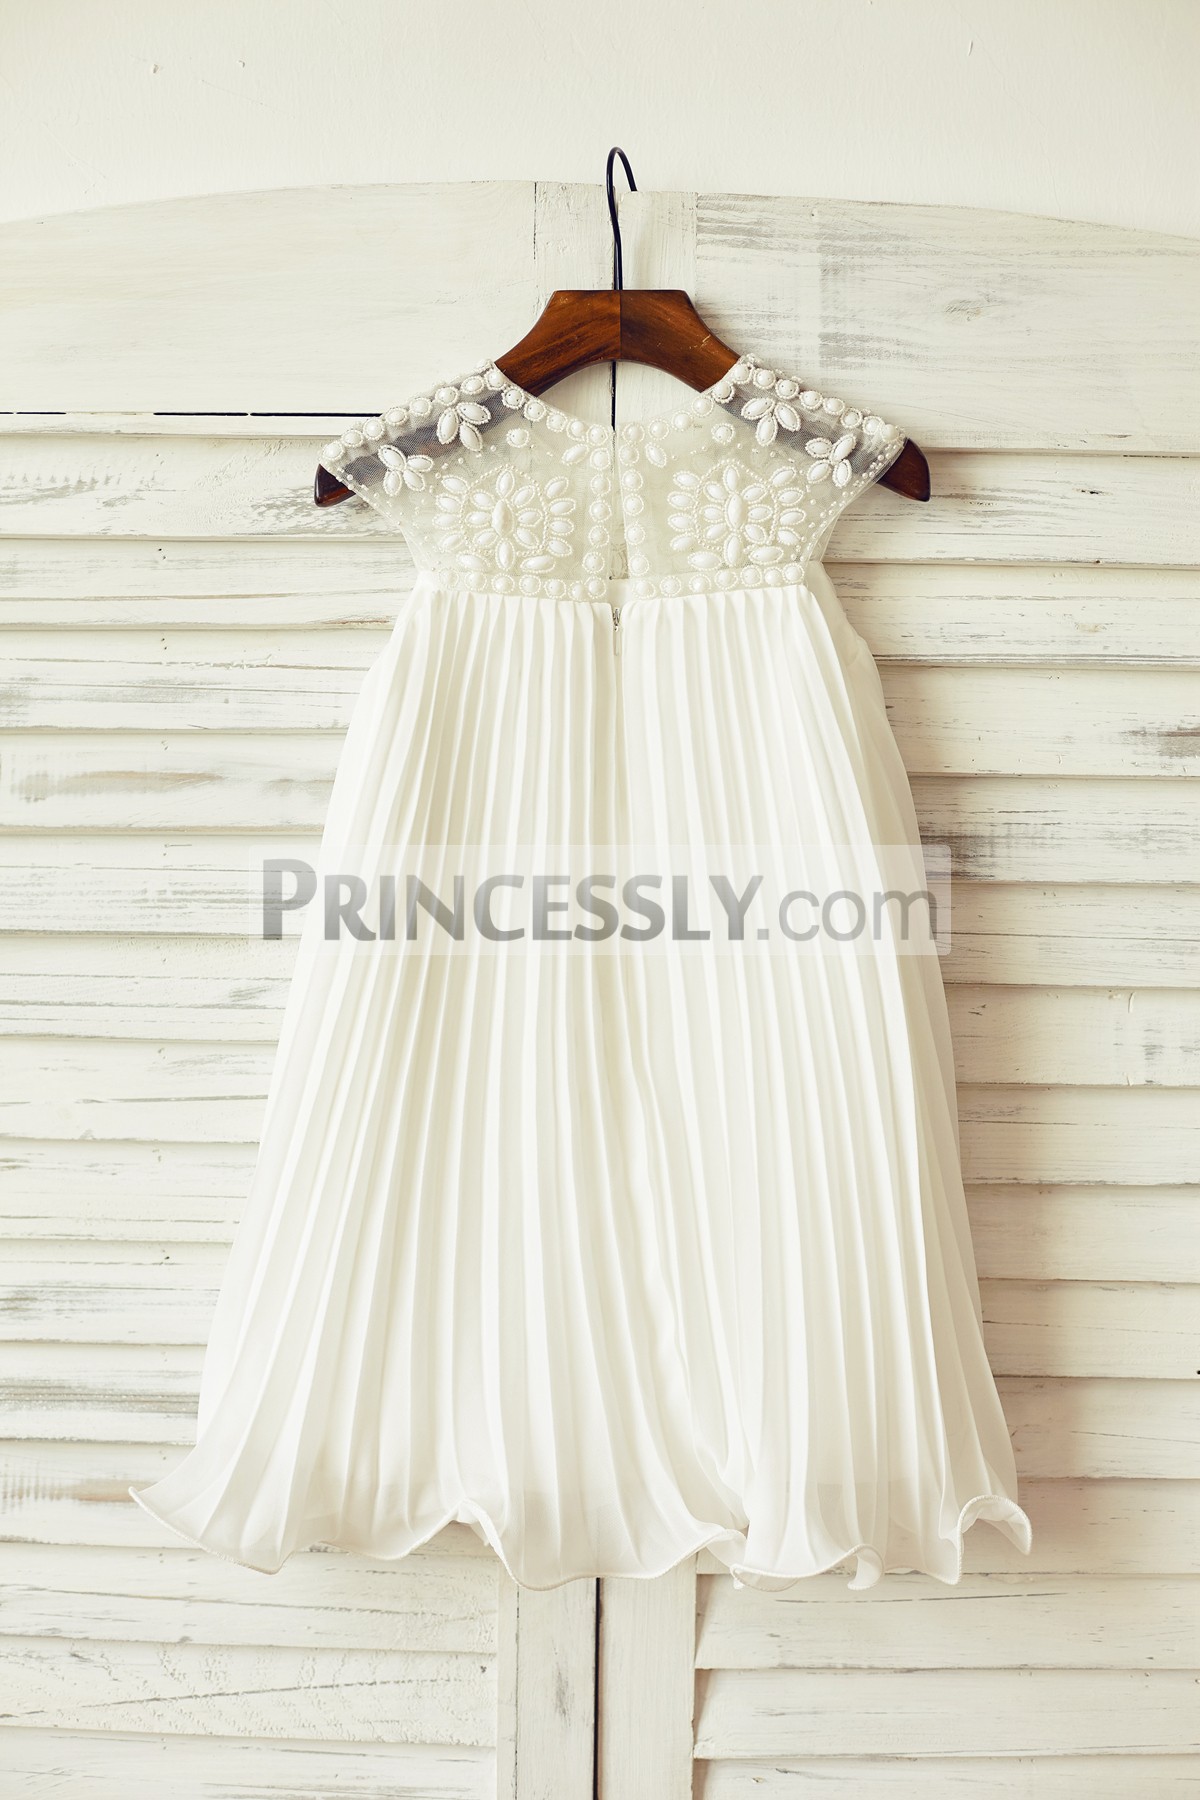 Beaded sheer tulle pleated ivory chiffon skirt with curly hem wedding little girl dress